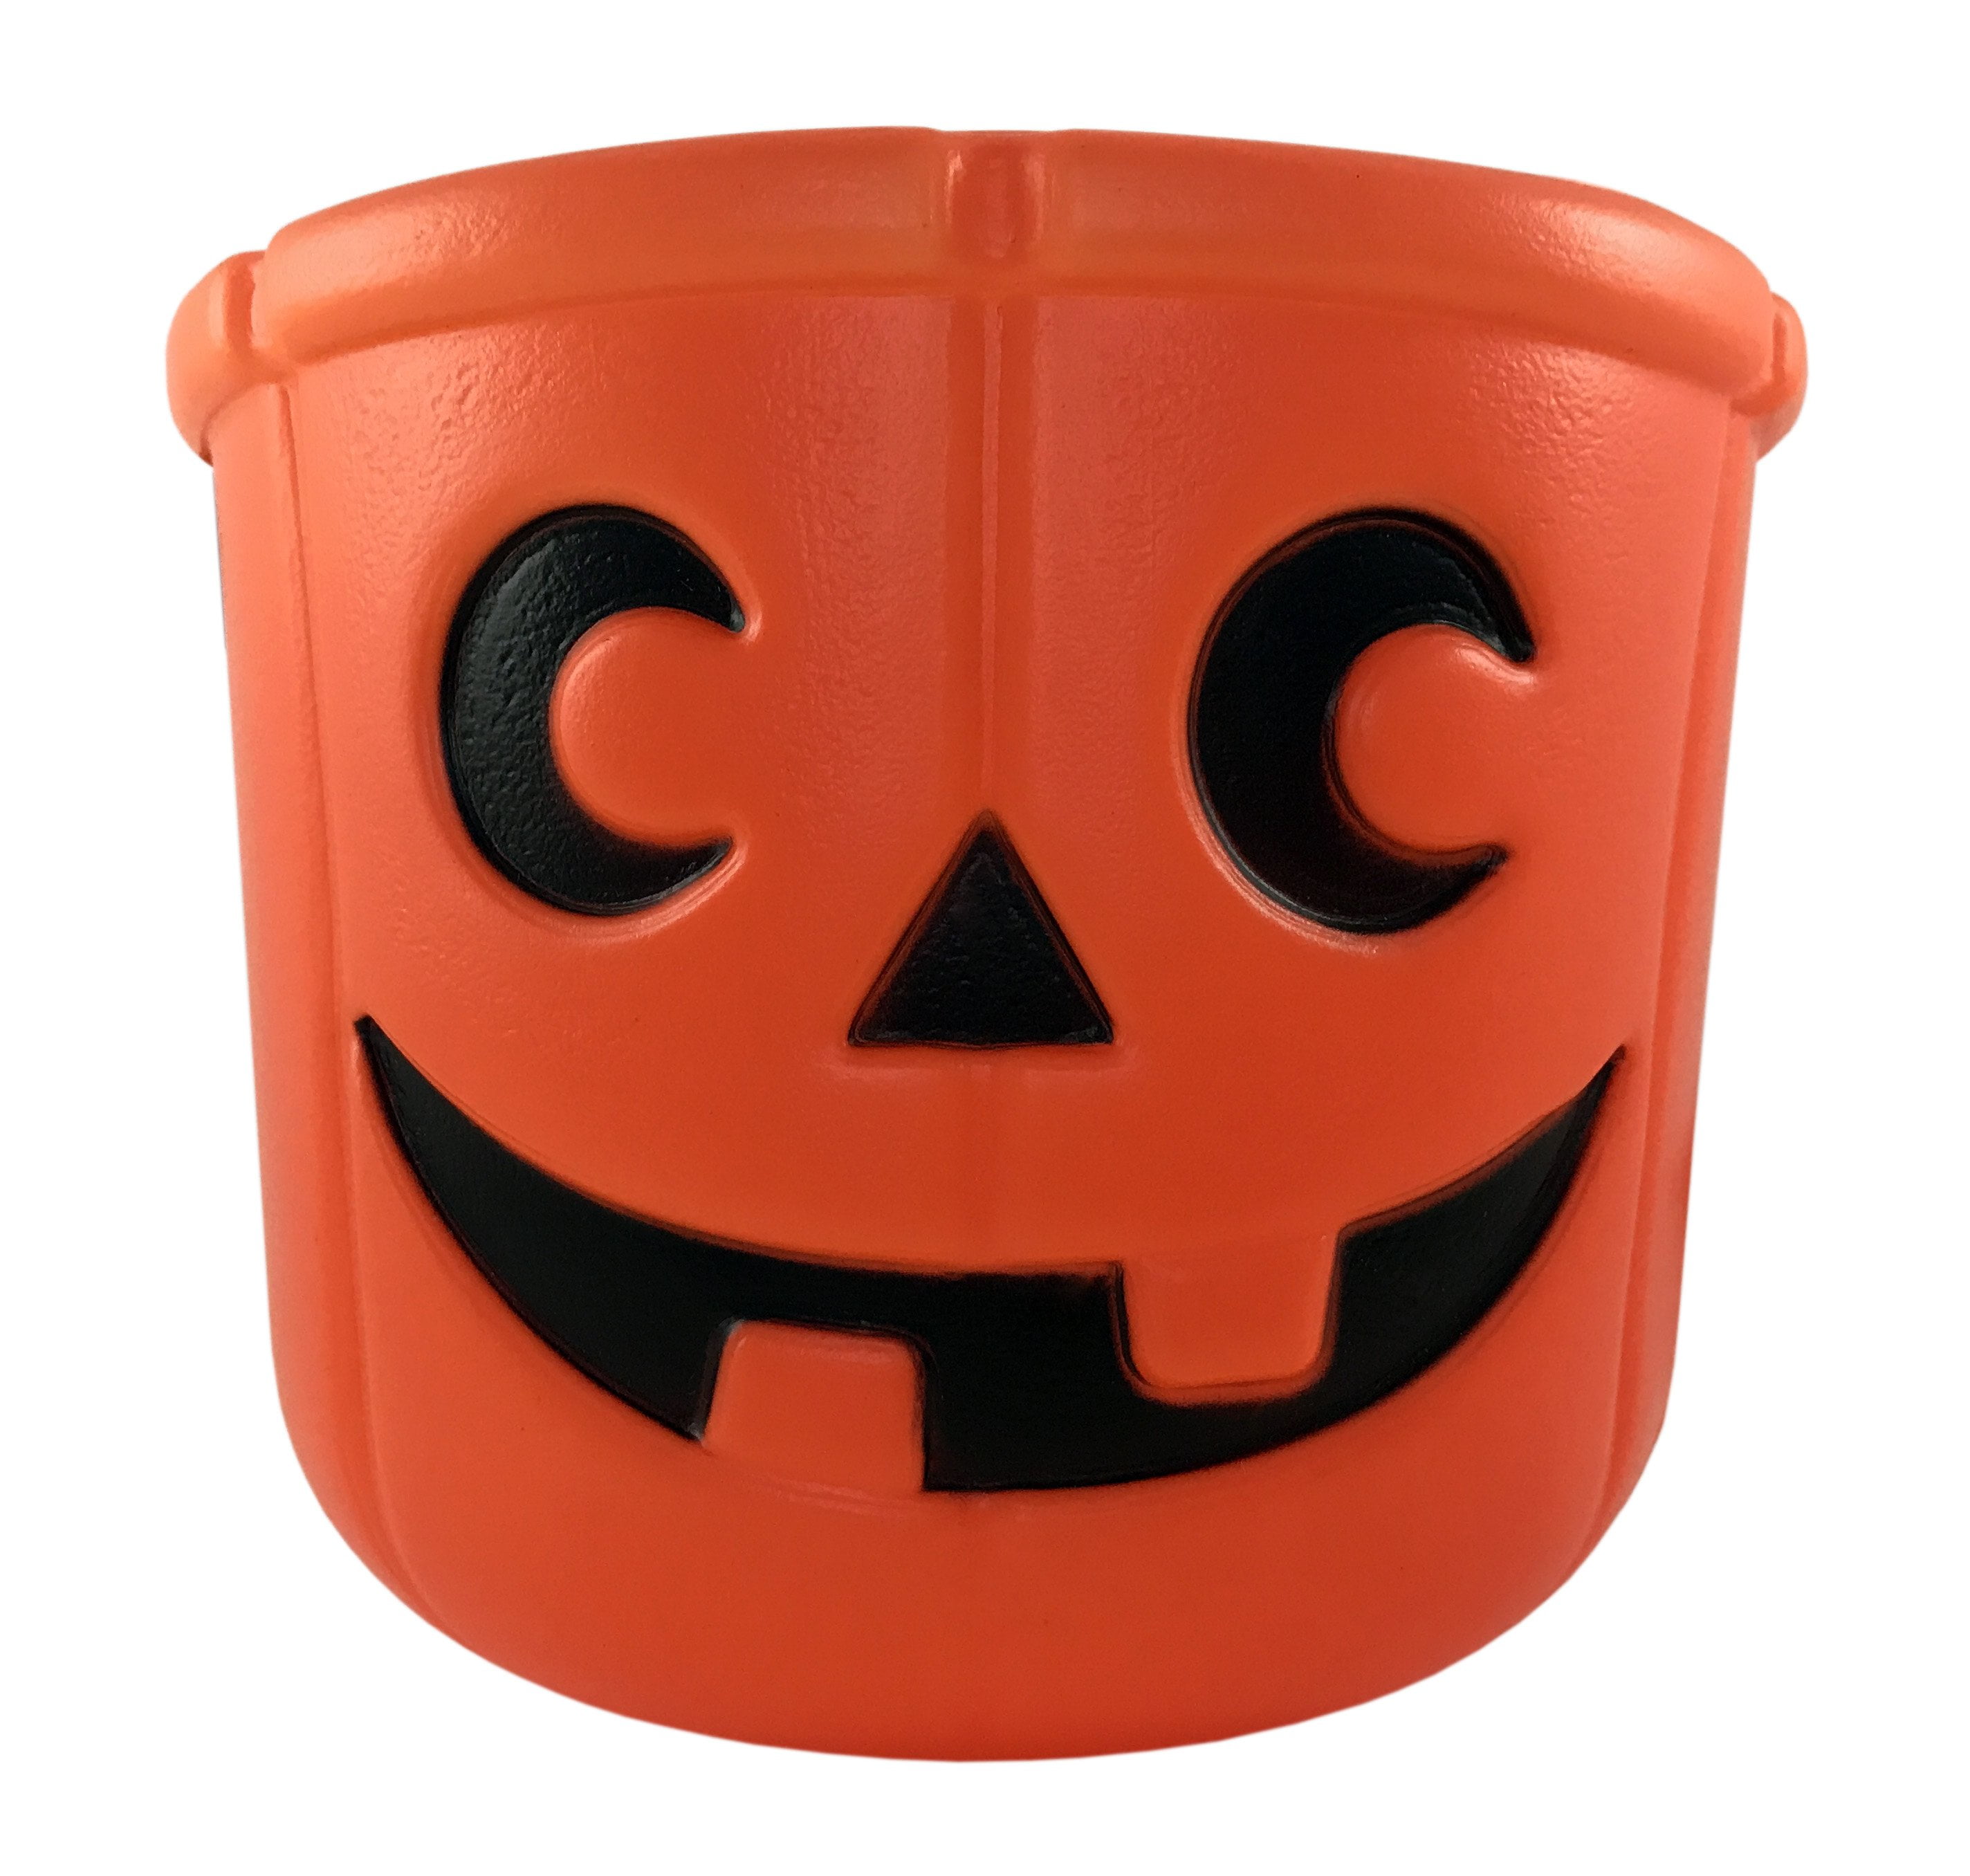 KINREX Halloween Pumpkin Candy Bucket - Trick or Treat Plastic Basket for  Kids - Great Party Decor Favors - Orange - Measures 5.5 inches